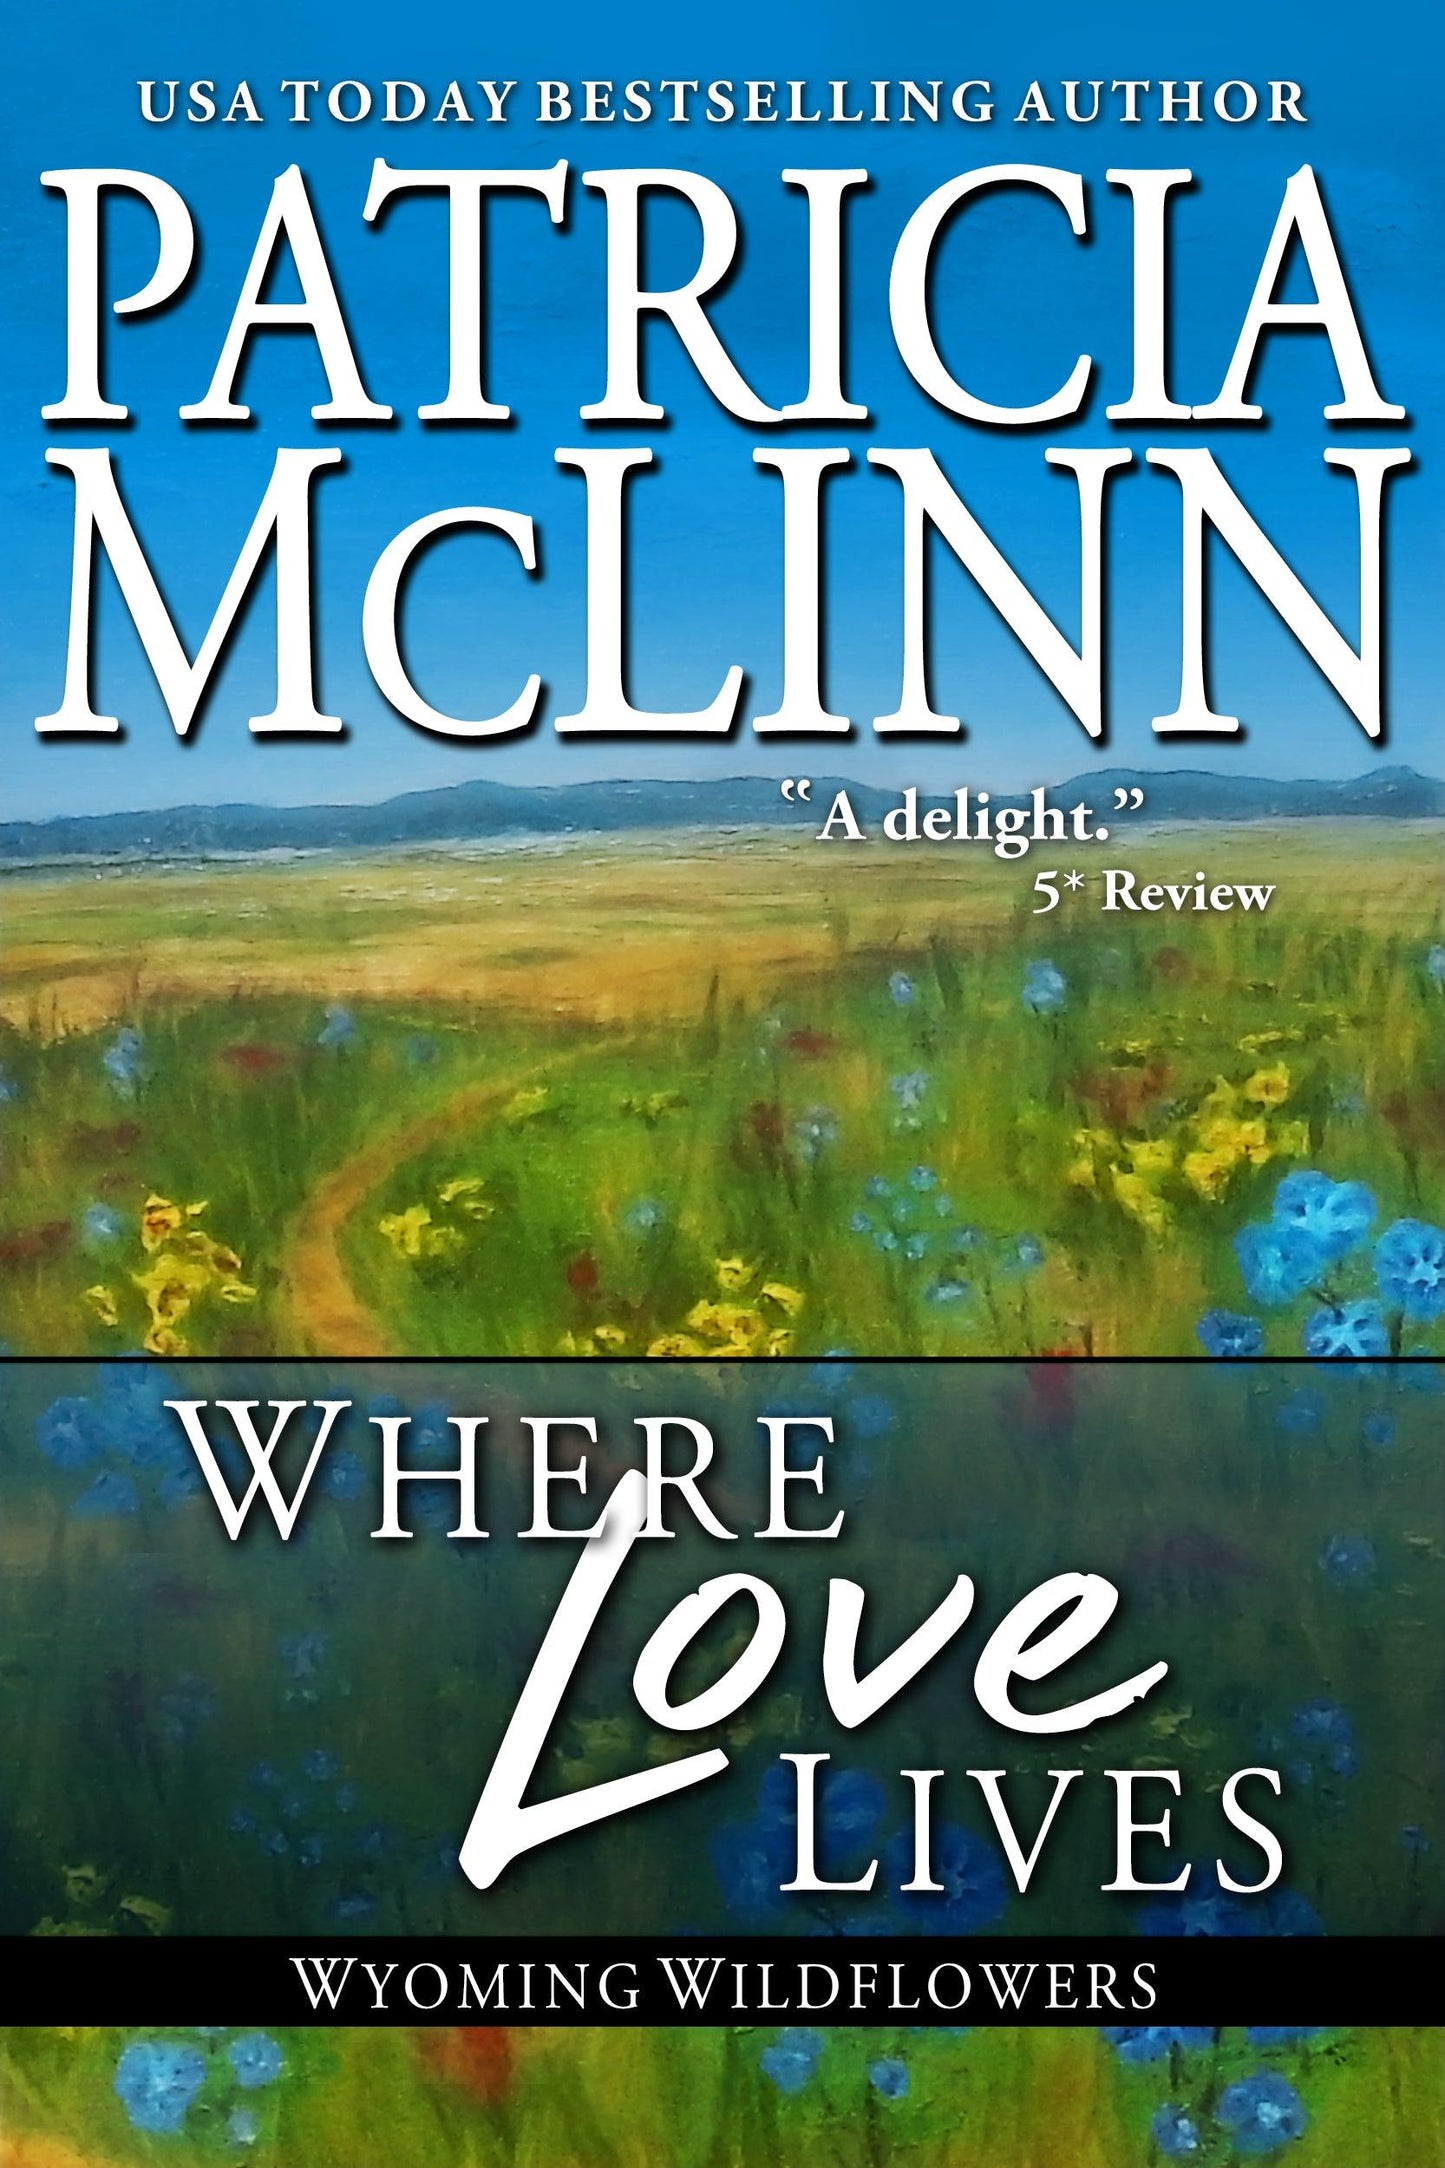 Where Love Lives - Patricia McLinn